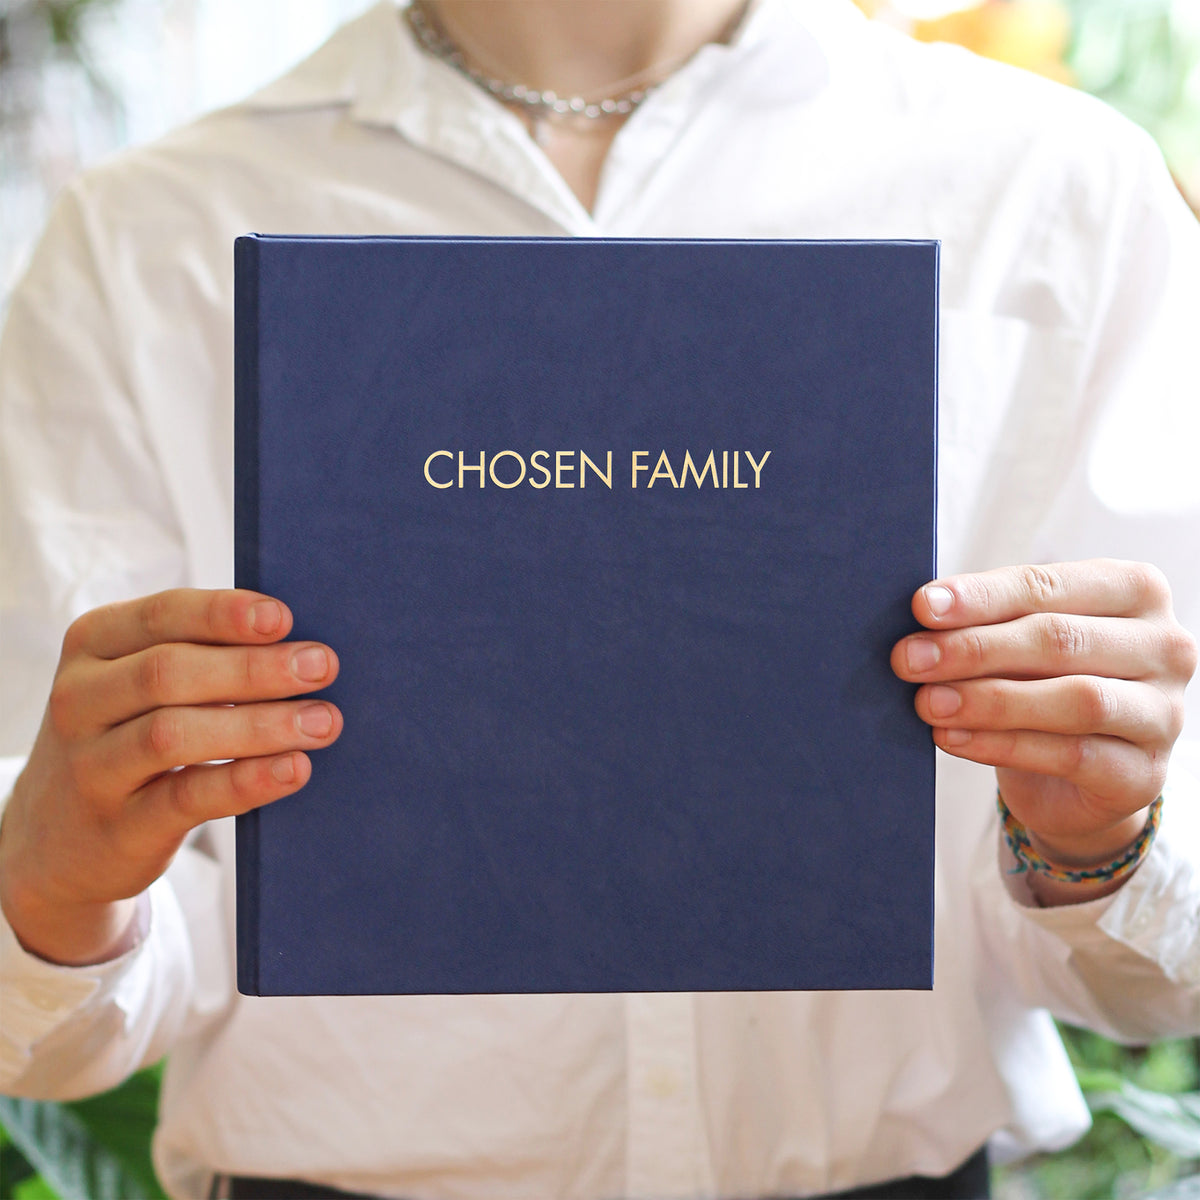 Chosen Family Album | Medium Photo Binder for 4 x 6 photos | with Indigo Vegan Leather Cover